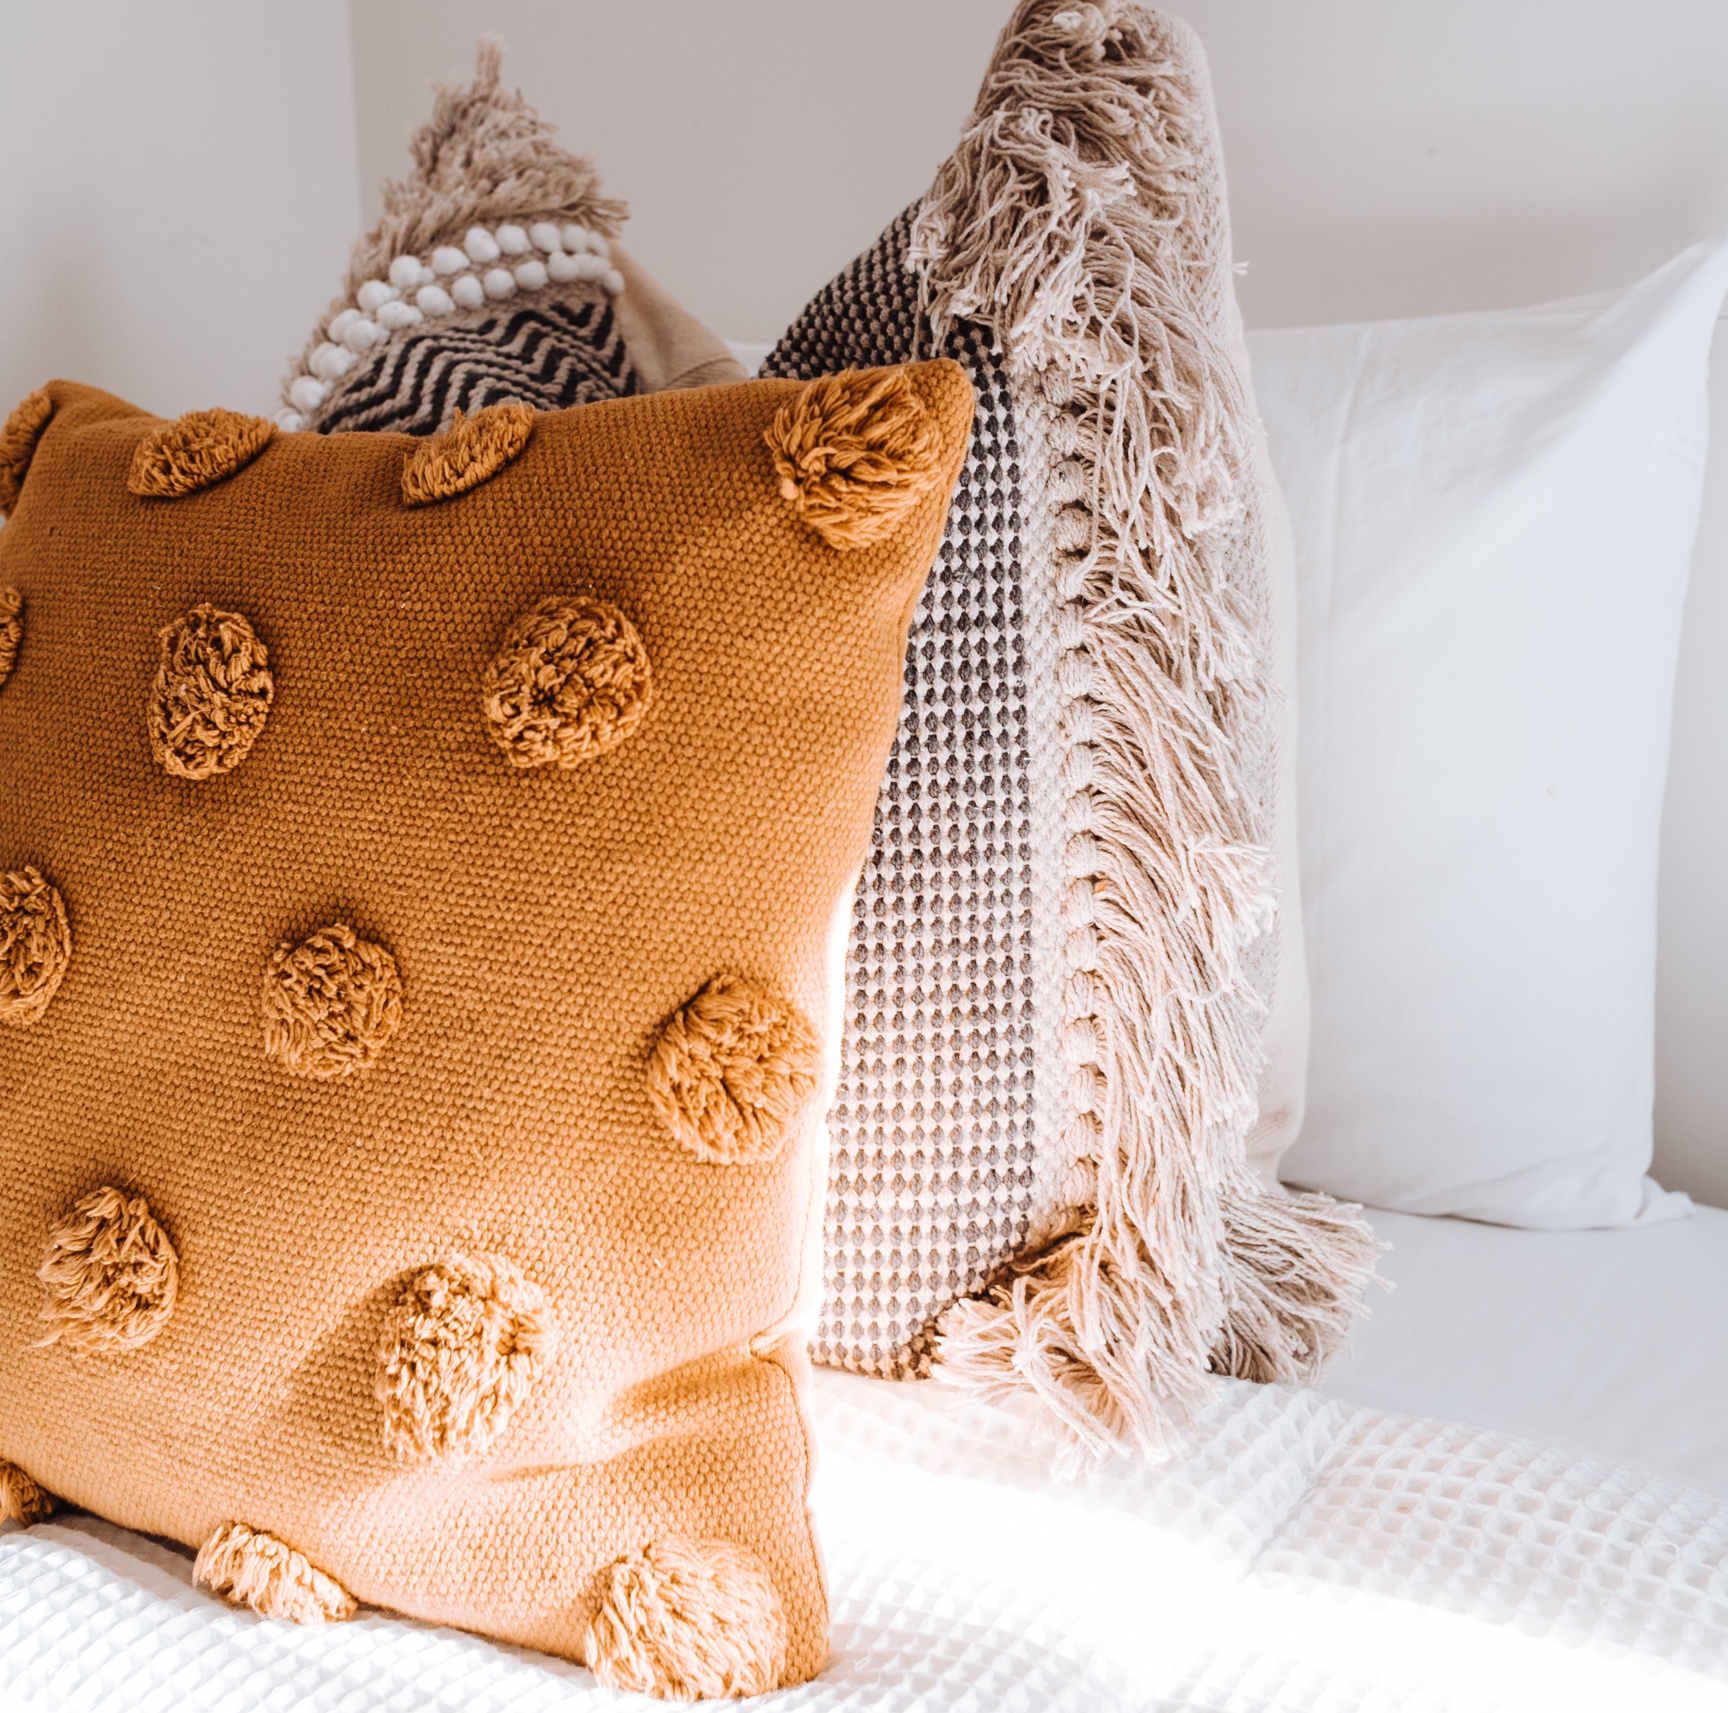 Pillow cover design, cushion cover design ideas, Home decoration 